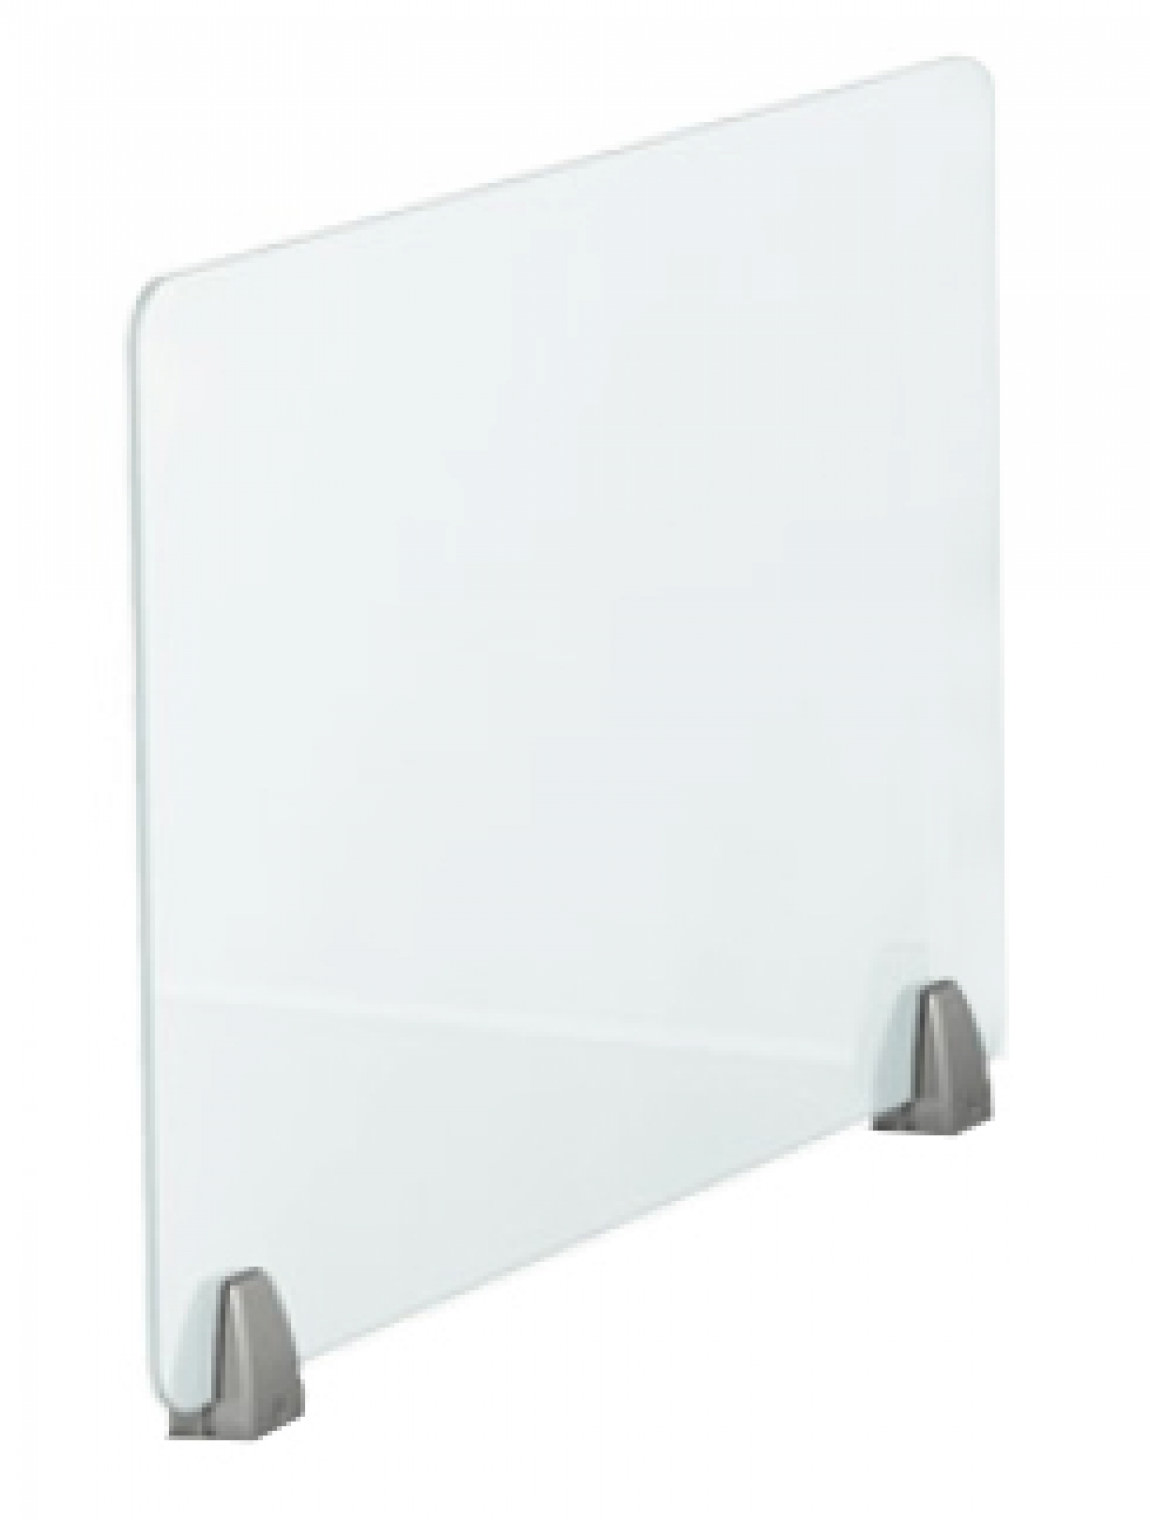 Plexiglass Acrylic Desk Divider Side Privacy Panel - Enclave by MergeWorks